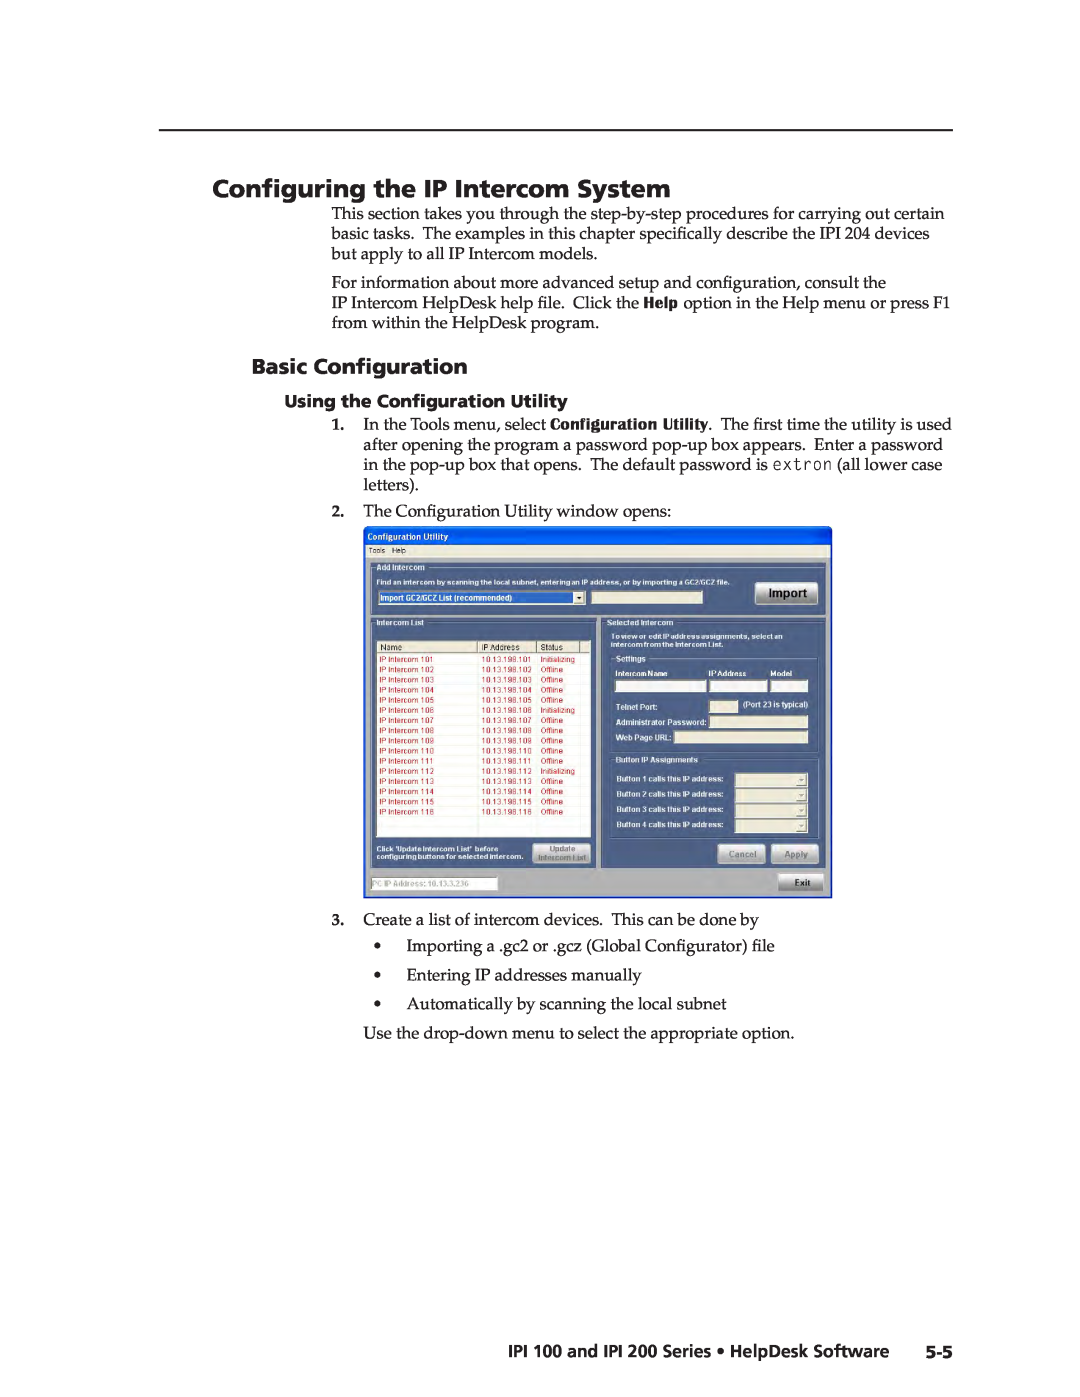 Extron electronic IPI 200 manual Configuring the IP Intercom System, Basic Configuration, Using the Configuration Utility 